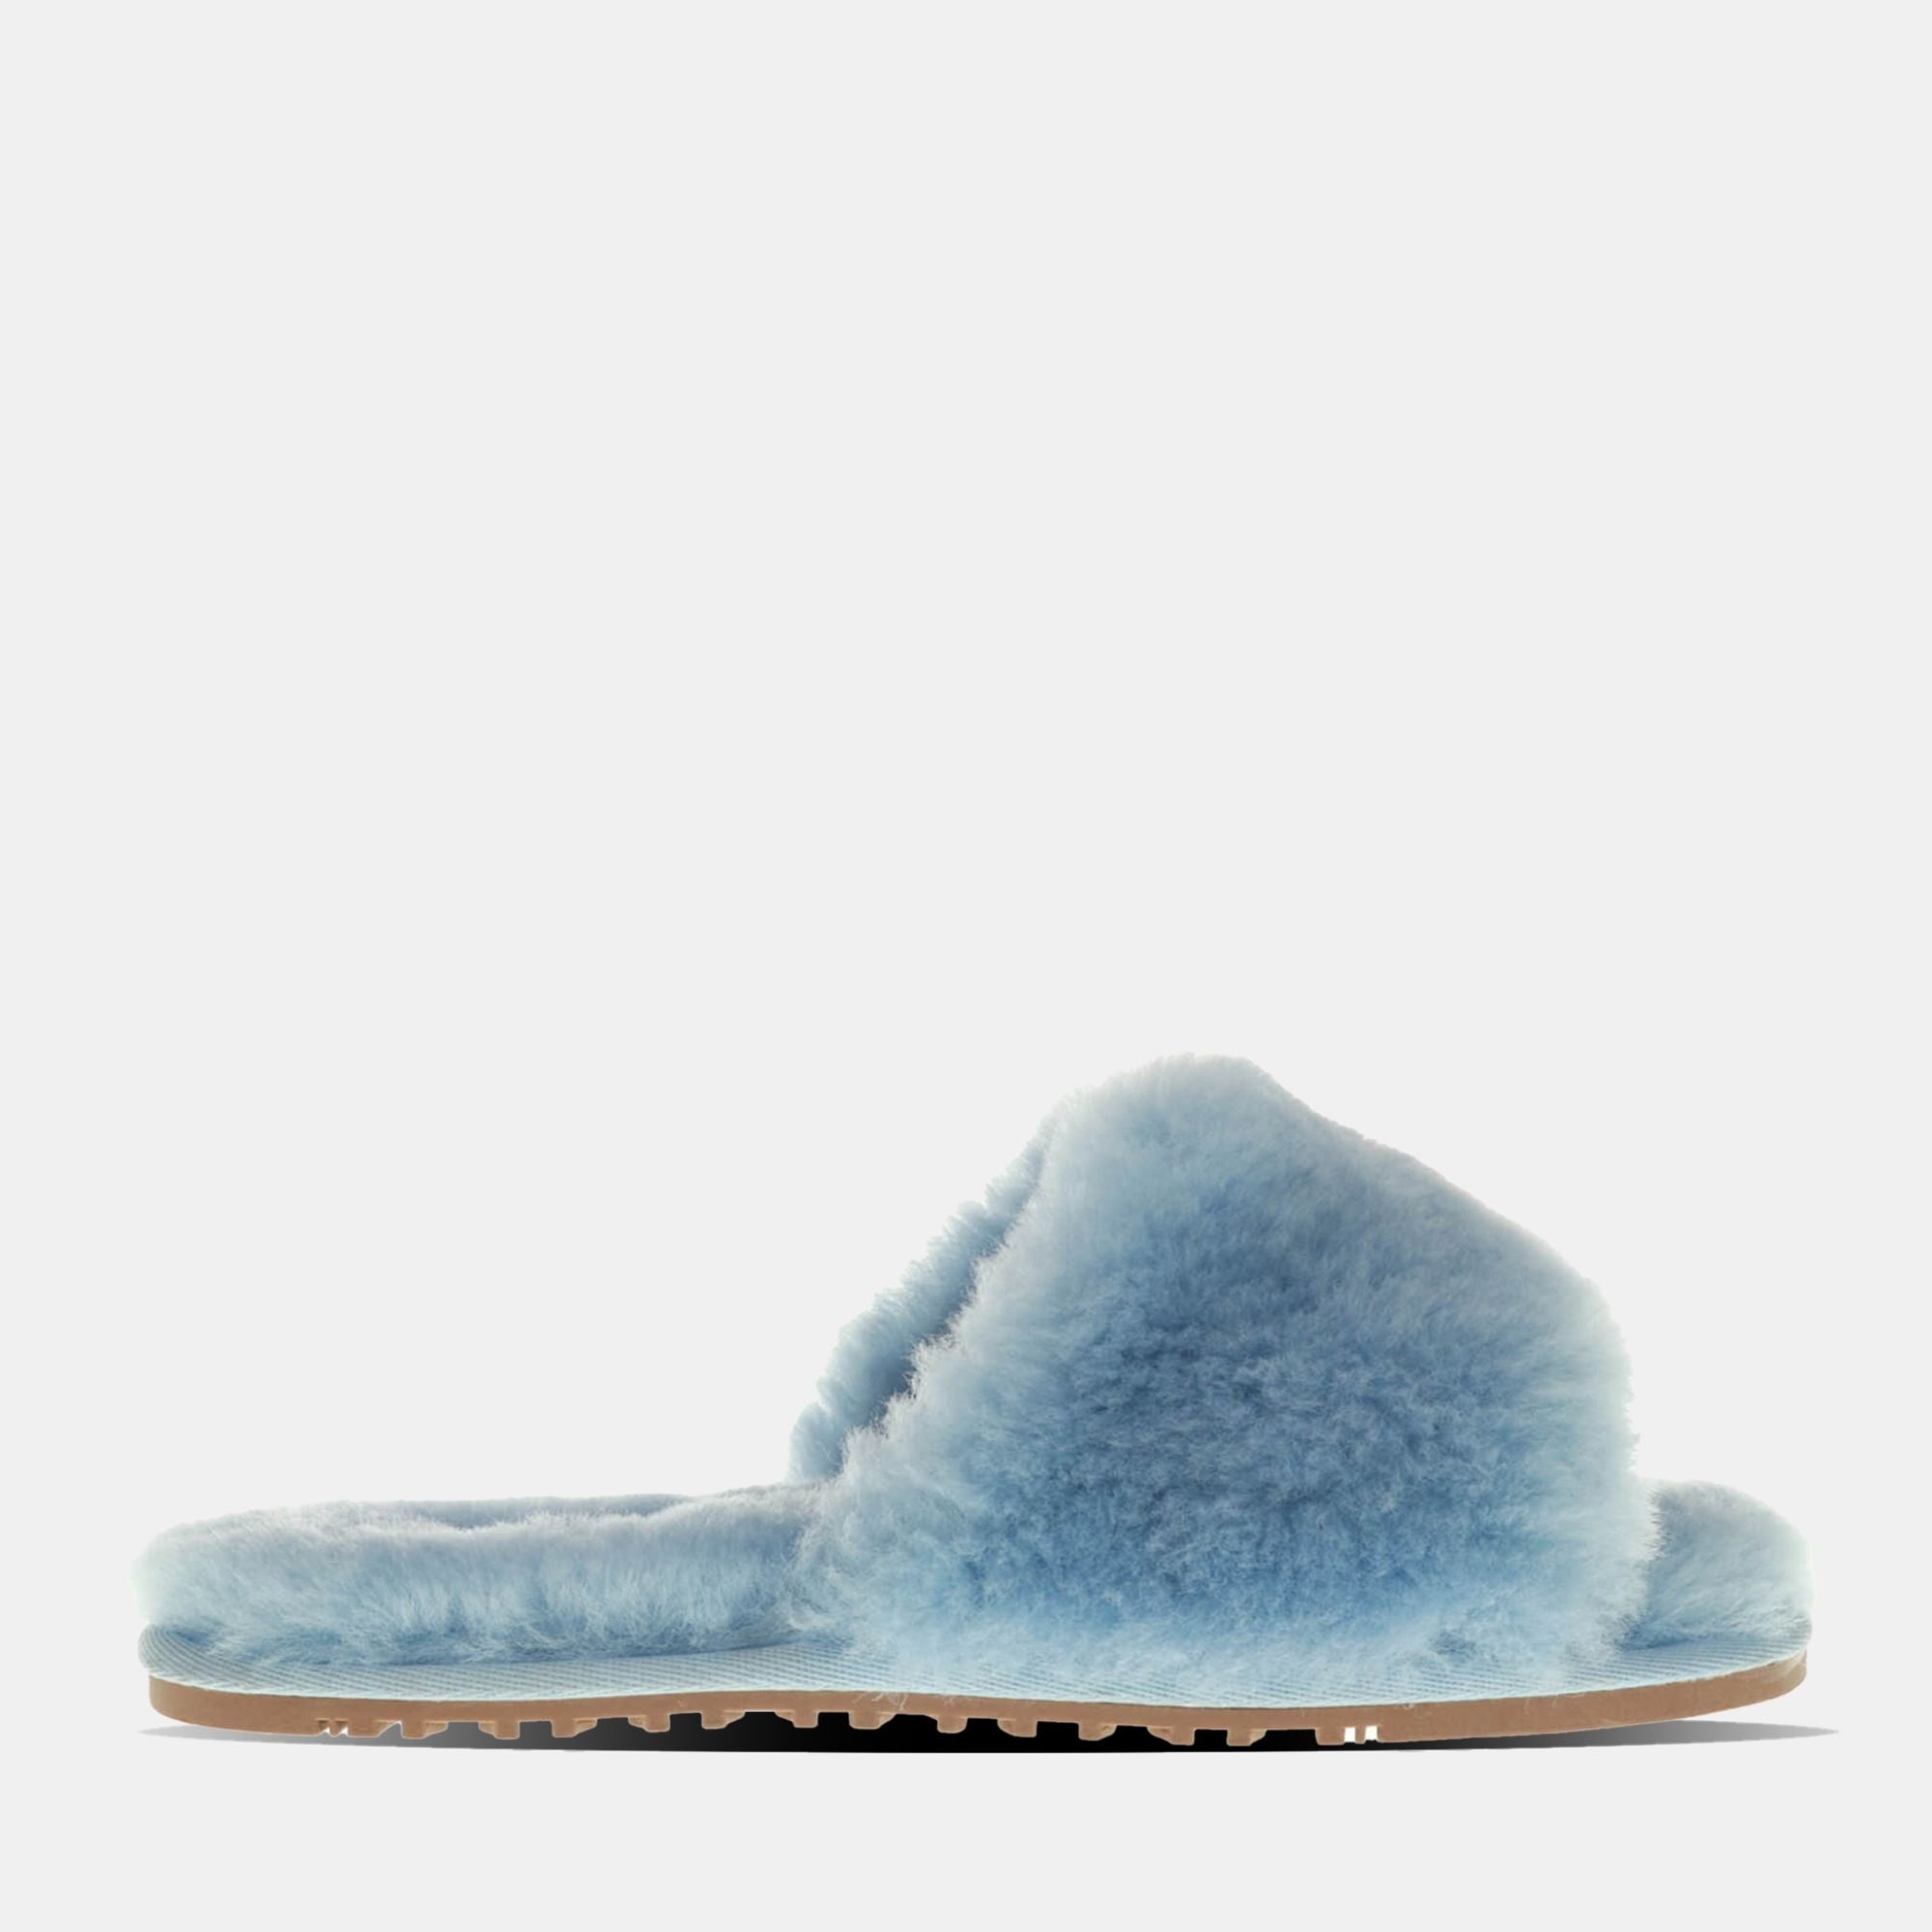 DeluxeComfort.com Womens Memory Foam House Slippers - Open Toe coral fleece  slipper with butterfly tie - Blue 5-6